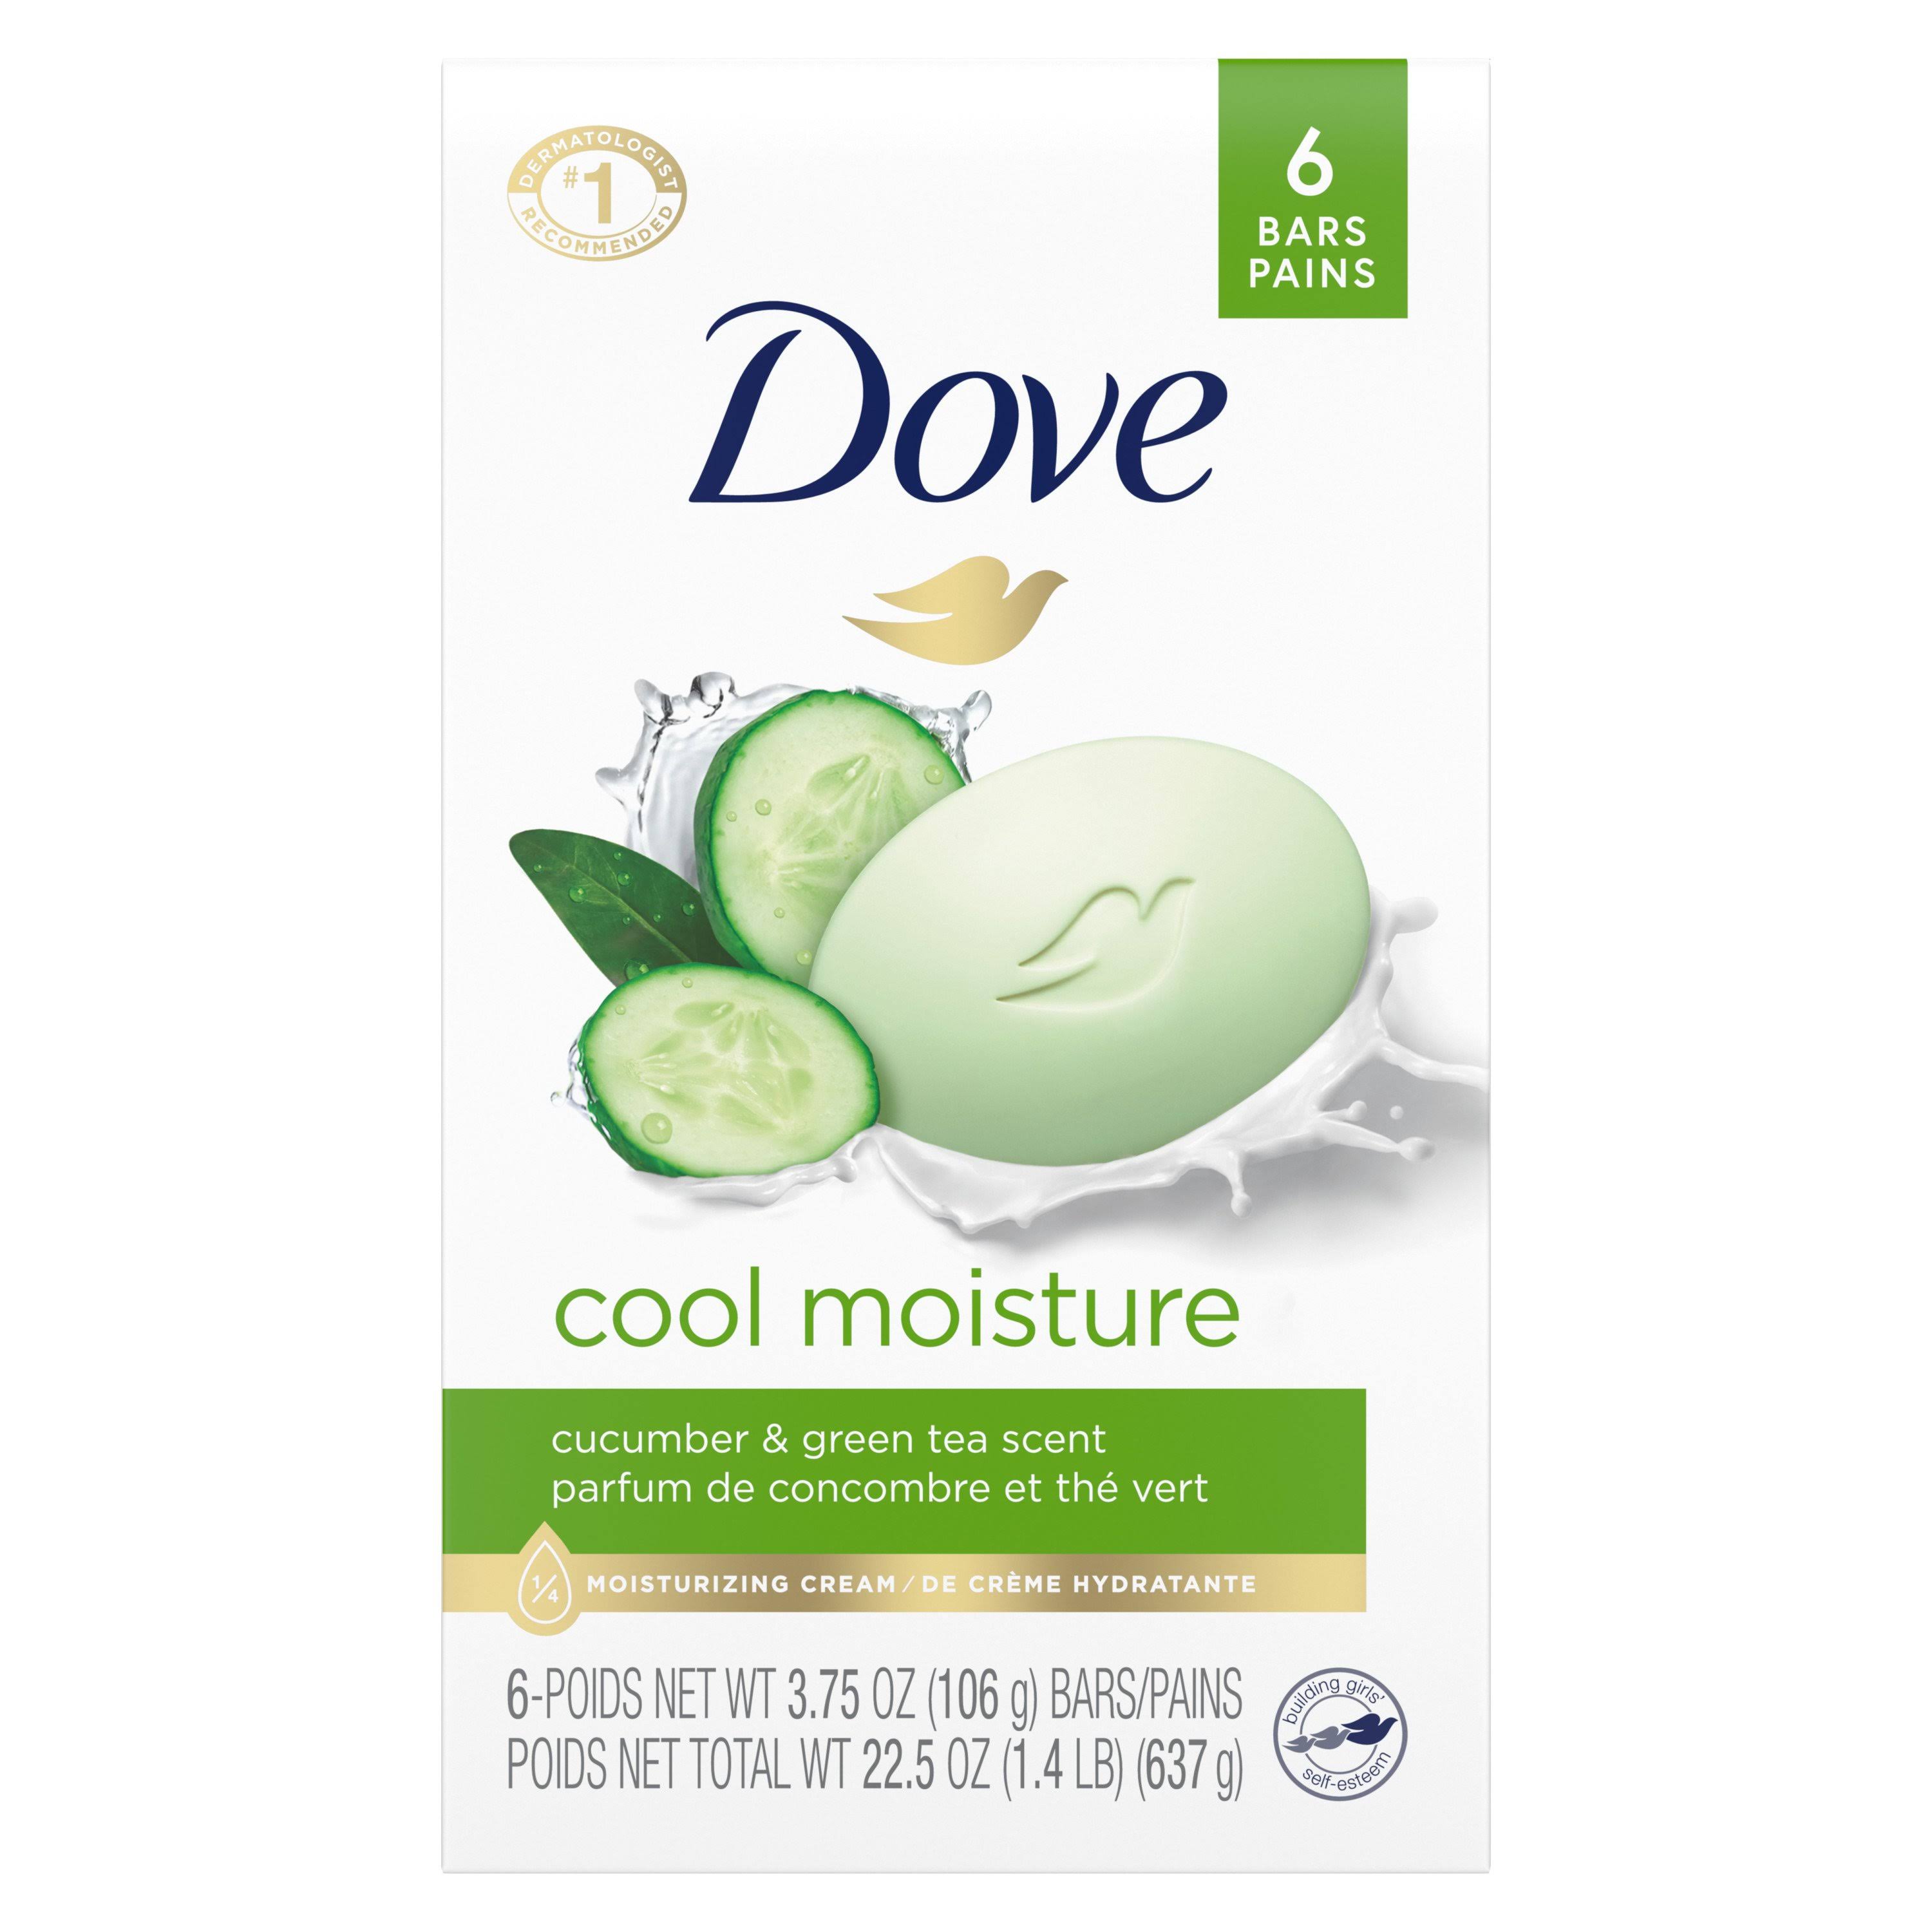 Dove Go Fresh Cool Moisture Beauty Bar with Cucumber & Green Tea Scent Bath Bars - 6 x 4 oz